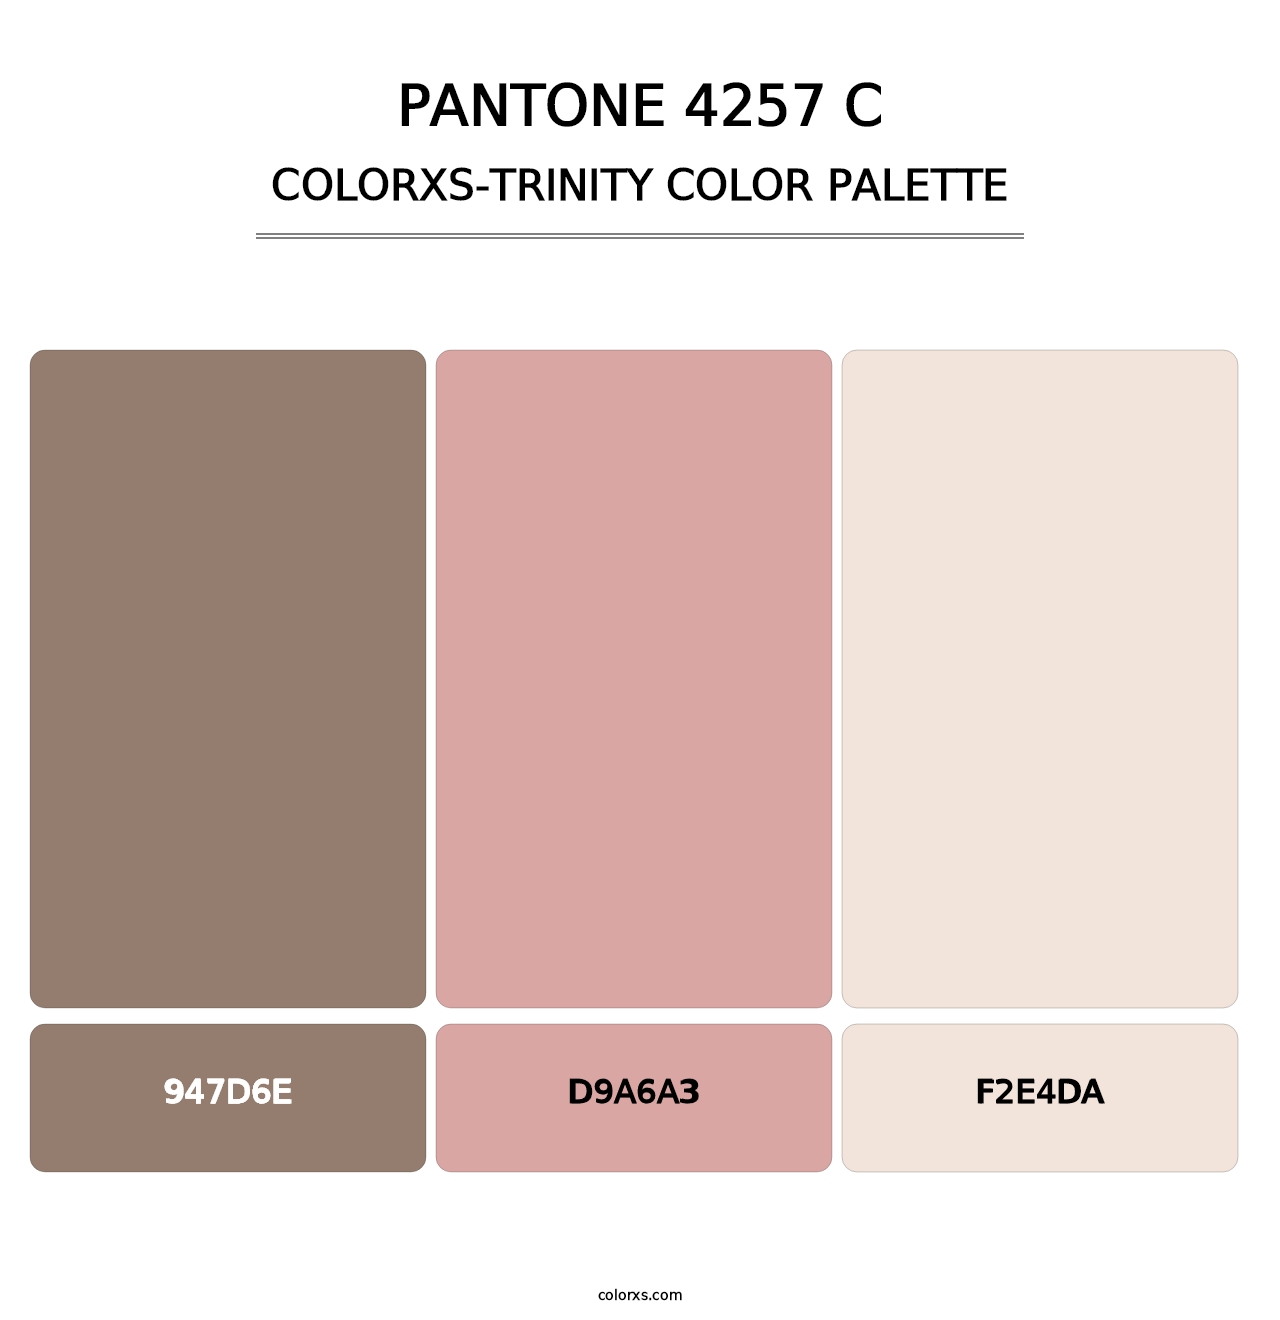 PANTONE 4257 C - Colorxs Trinity Palette